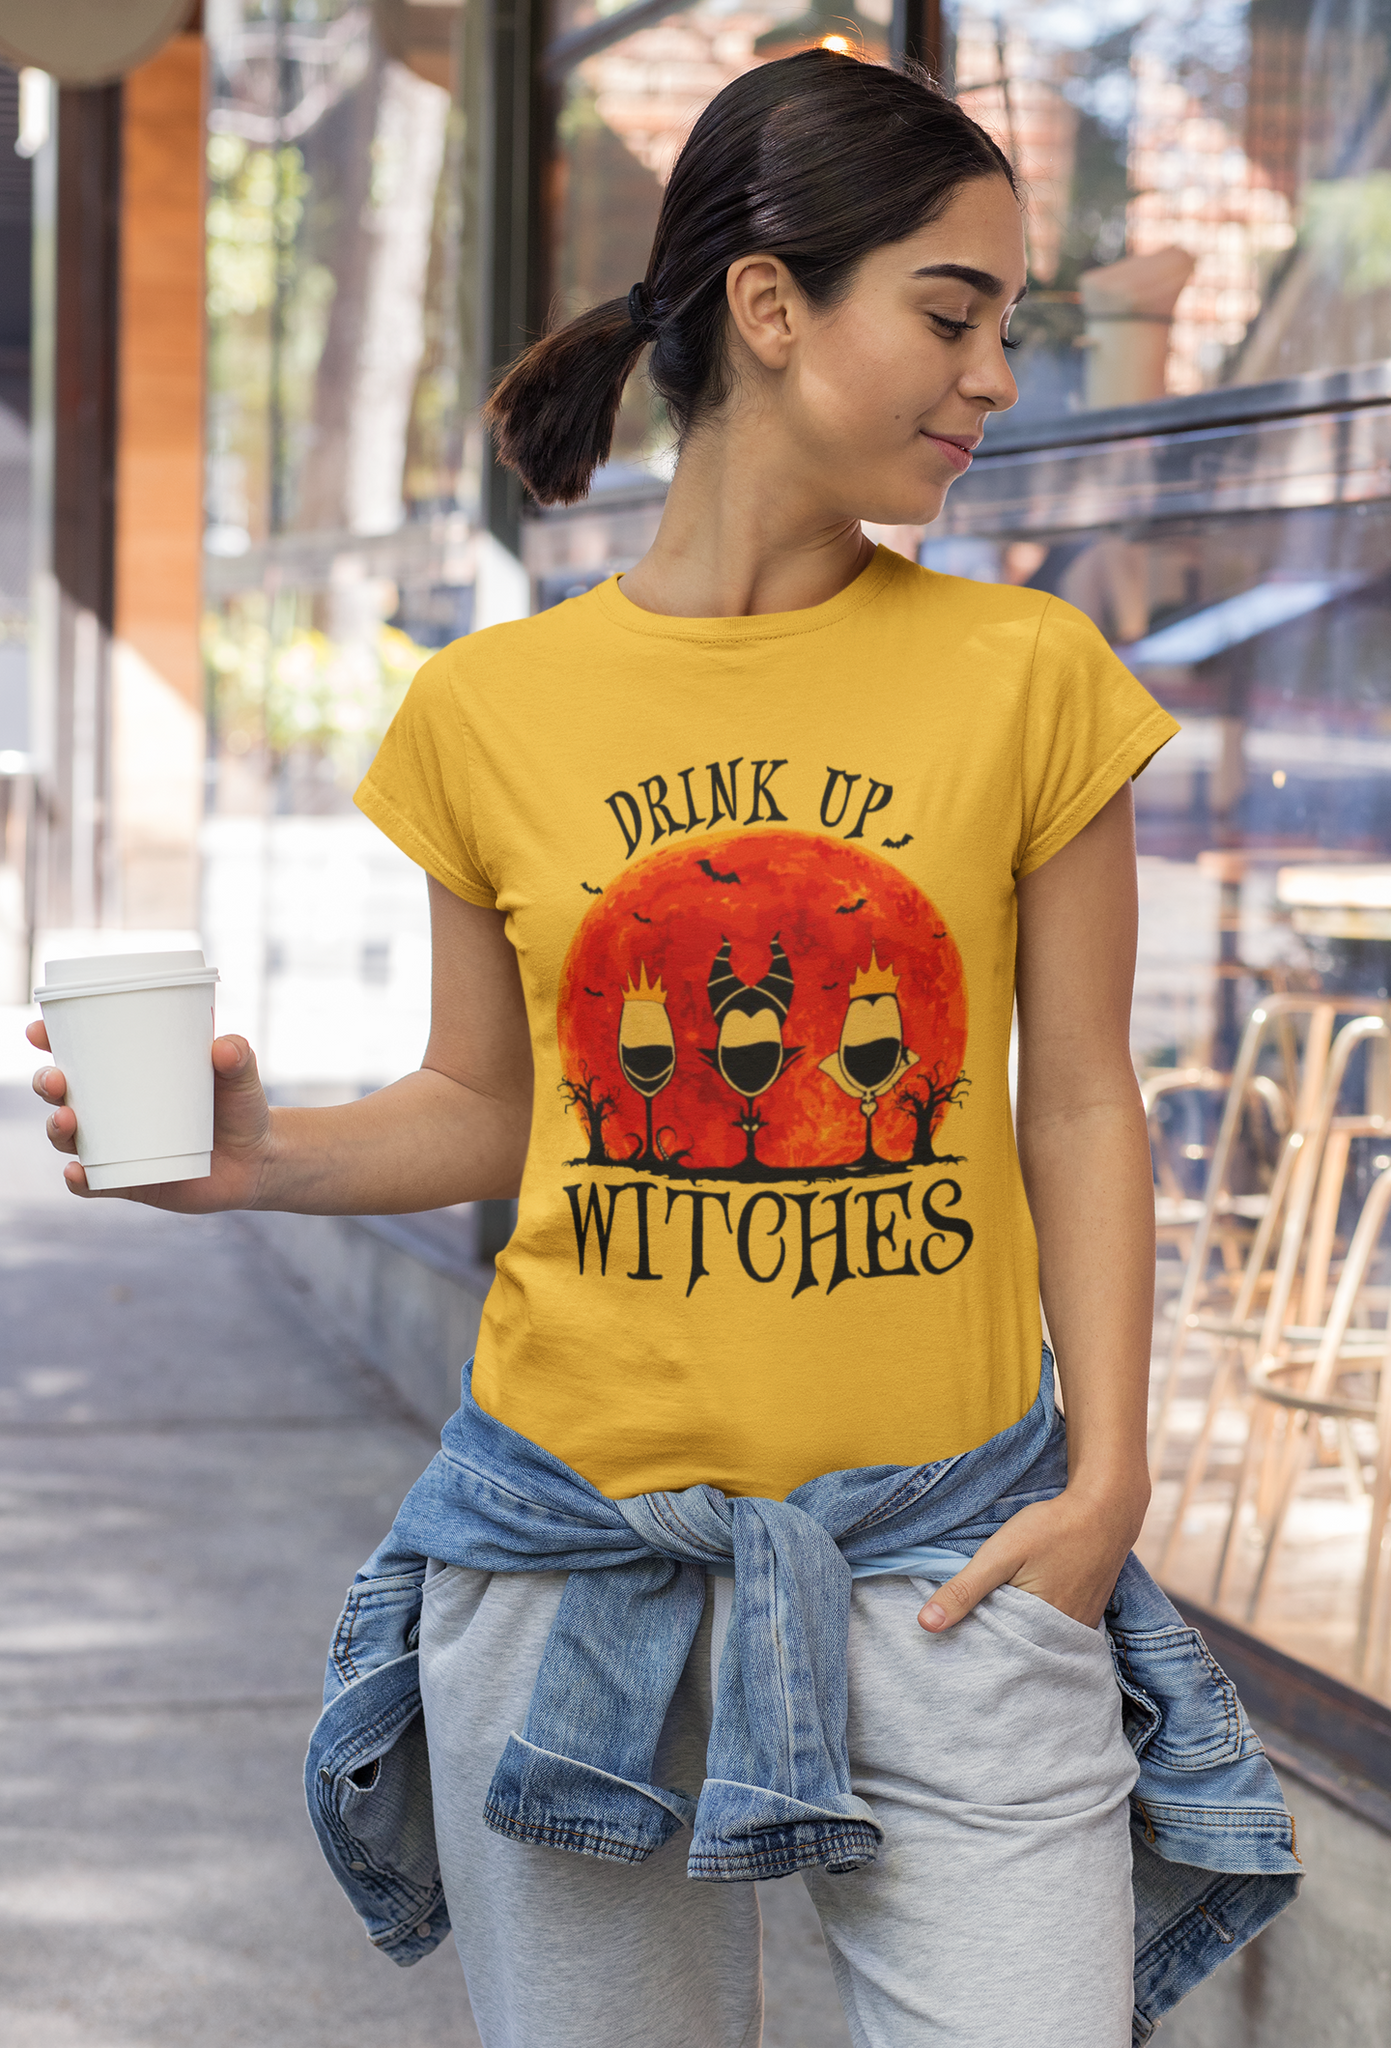 Disney Maleficent T Shirt, Disney Villains T Shirt, Maleficent Evil Queen Tshirt, Drink Up Witches Shirt, Halloween Gifts